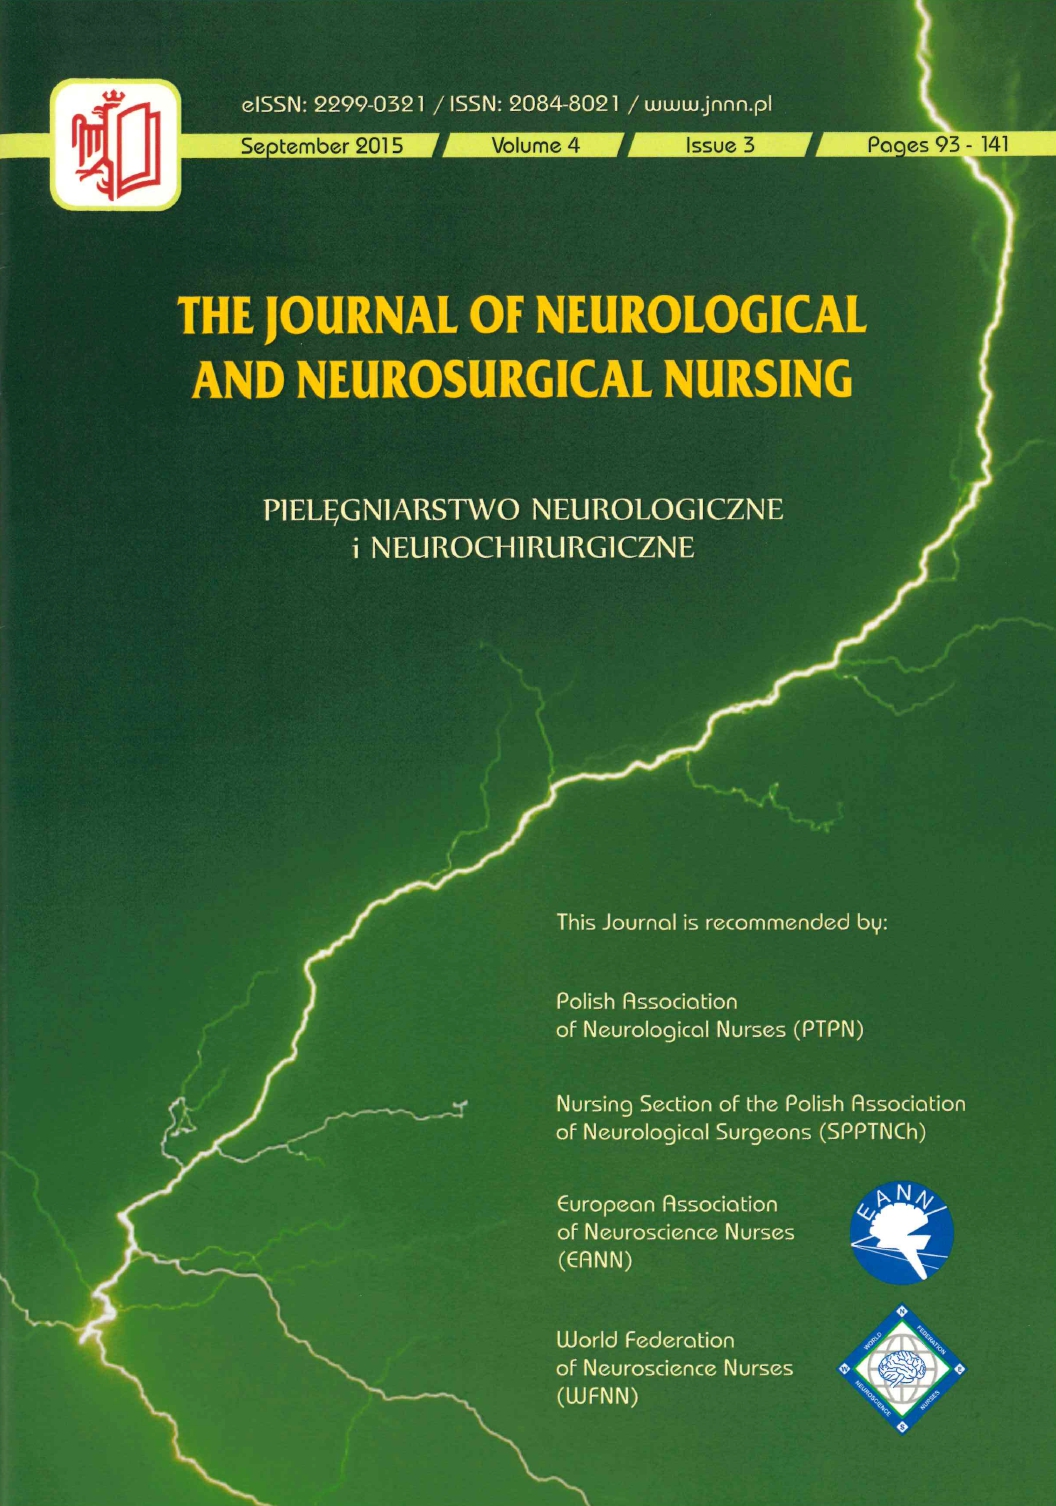 The Journal of Neurological and Neurosurgical Nursing